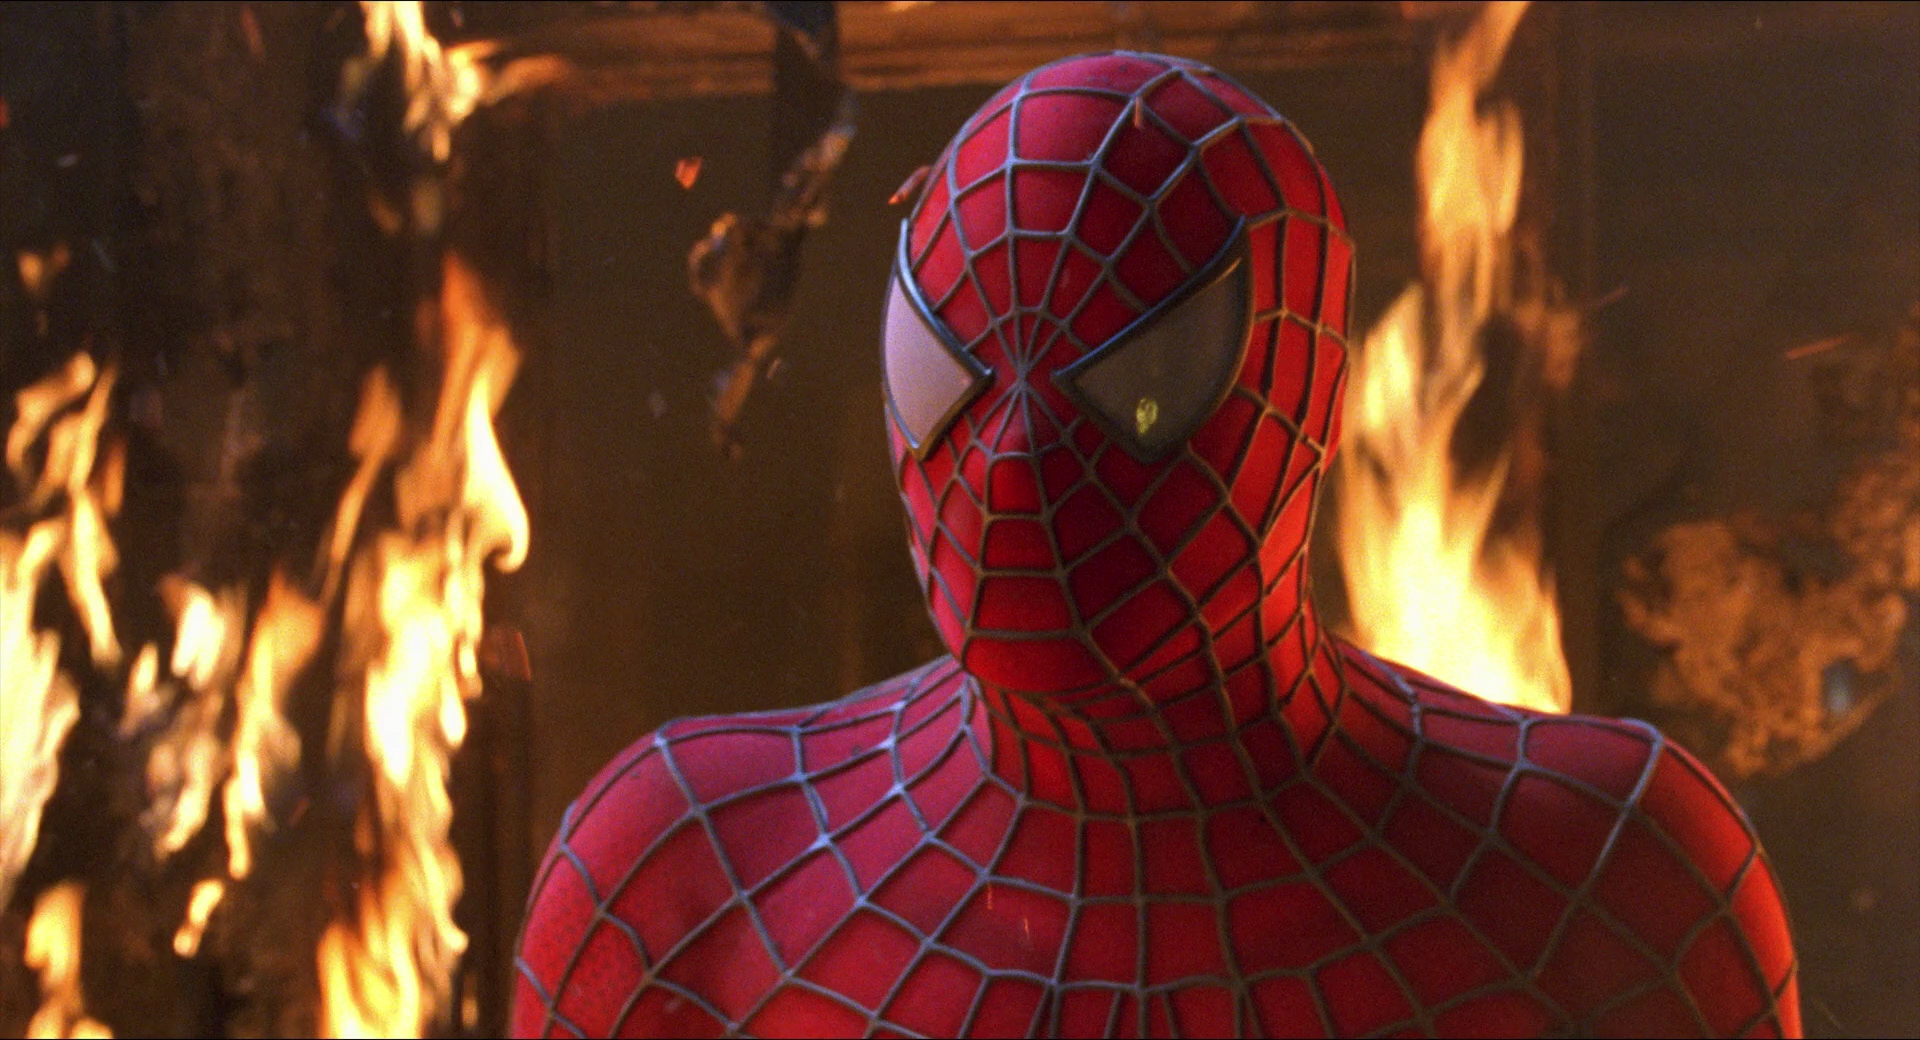 Spider Man 2002 1080p Download Torrent - sourced0wnload